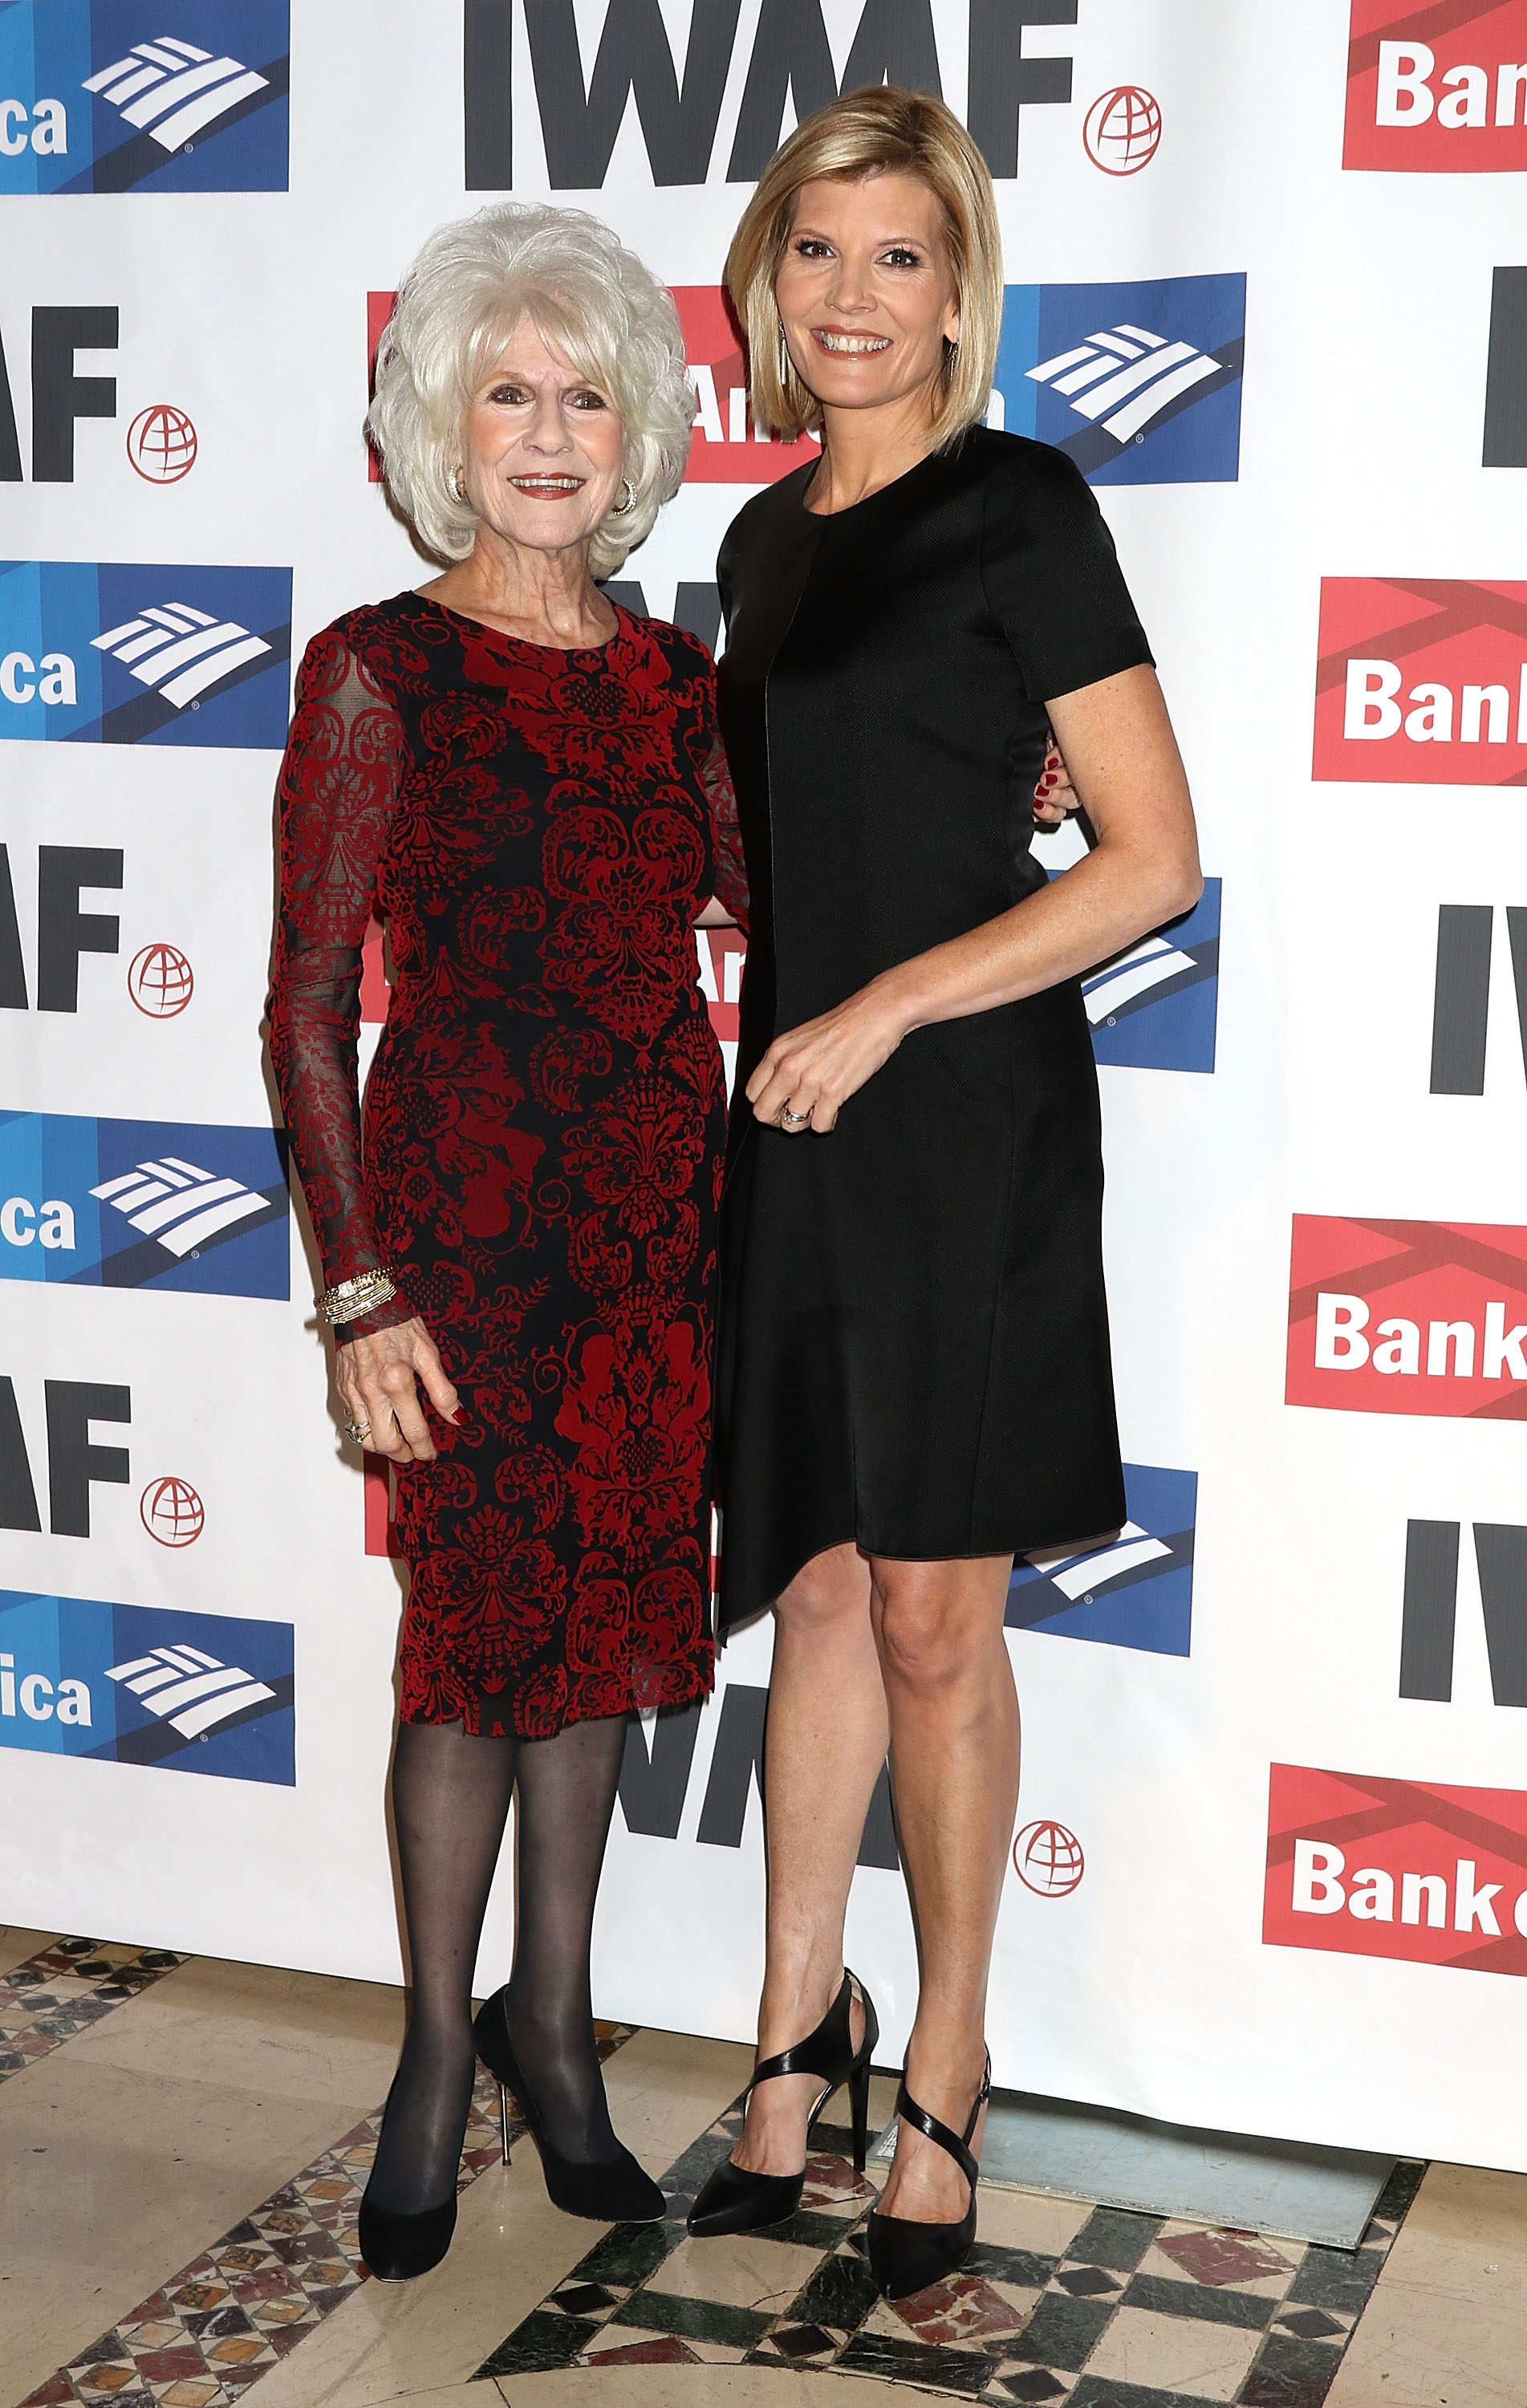 Kate Snow attends the International Women’s Media Foundation